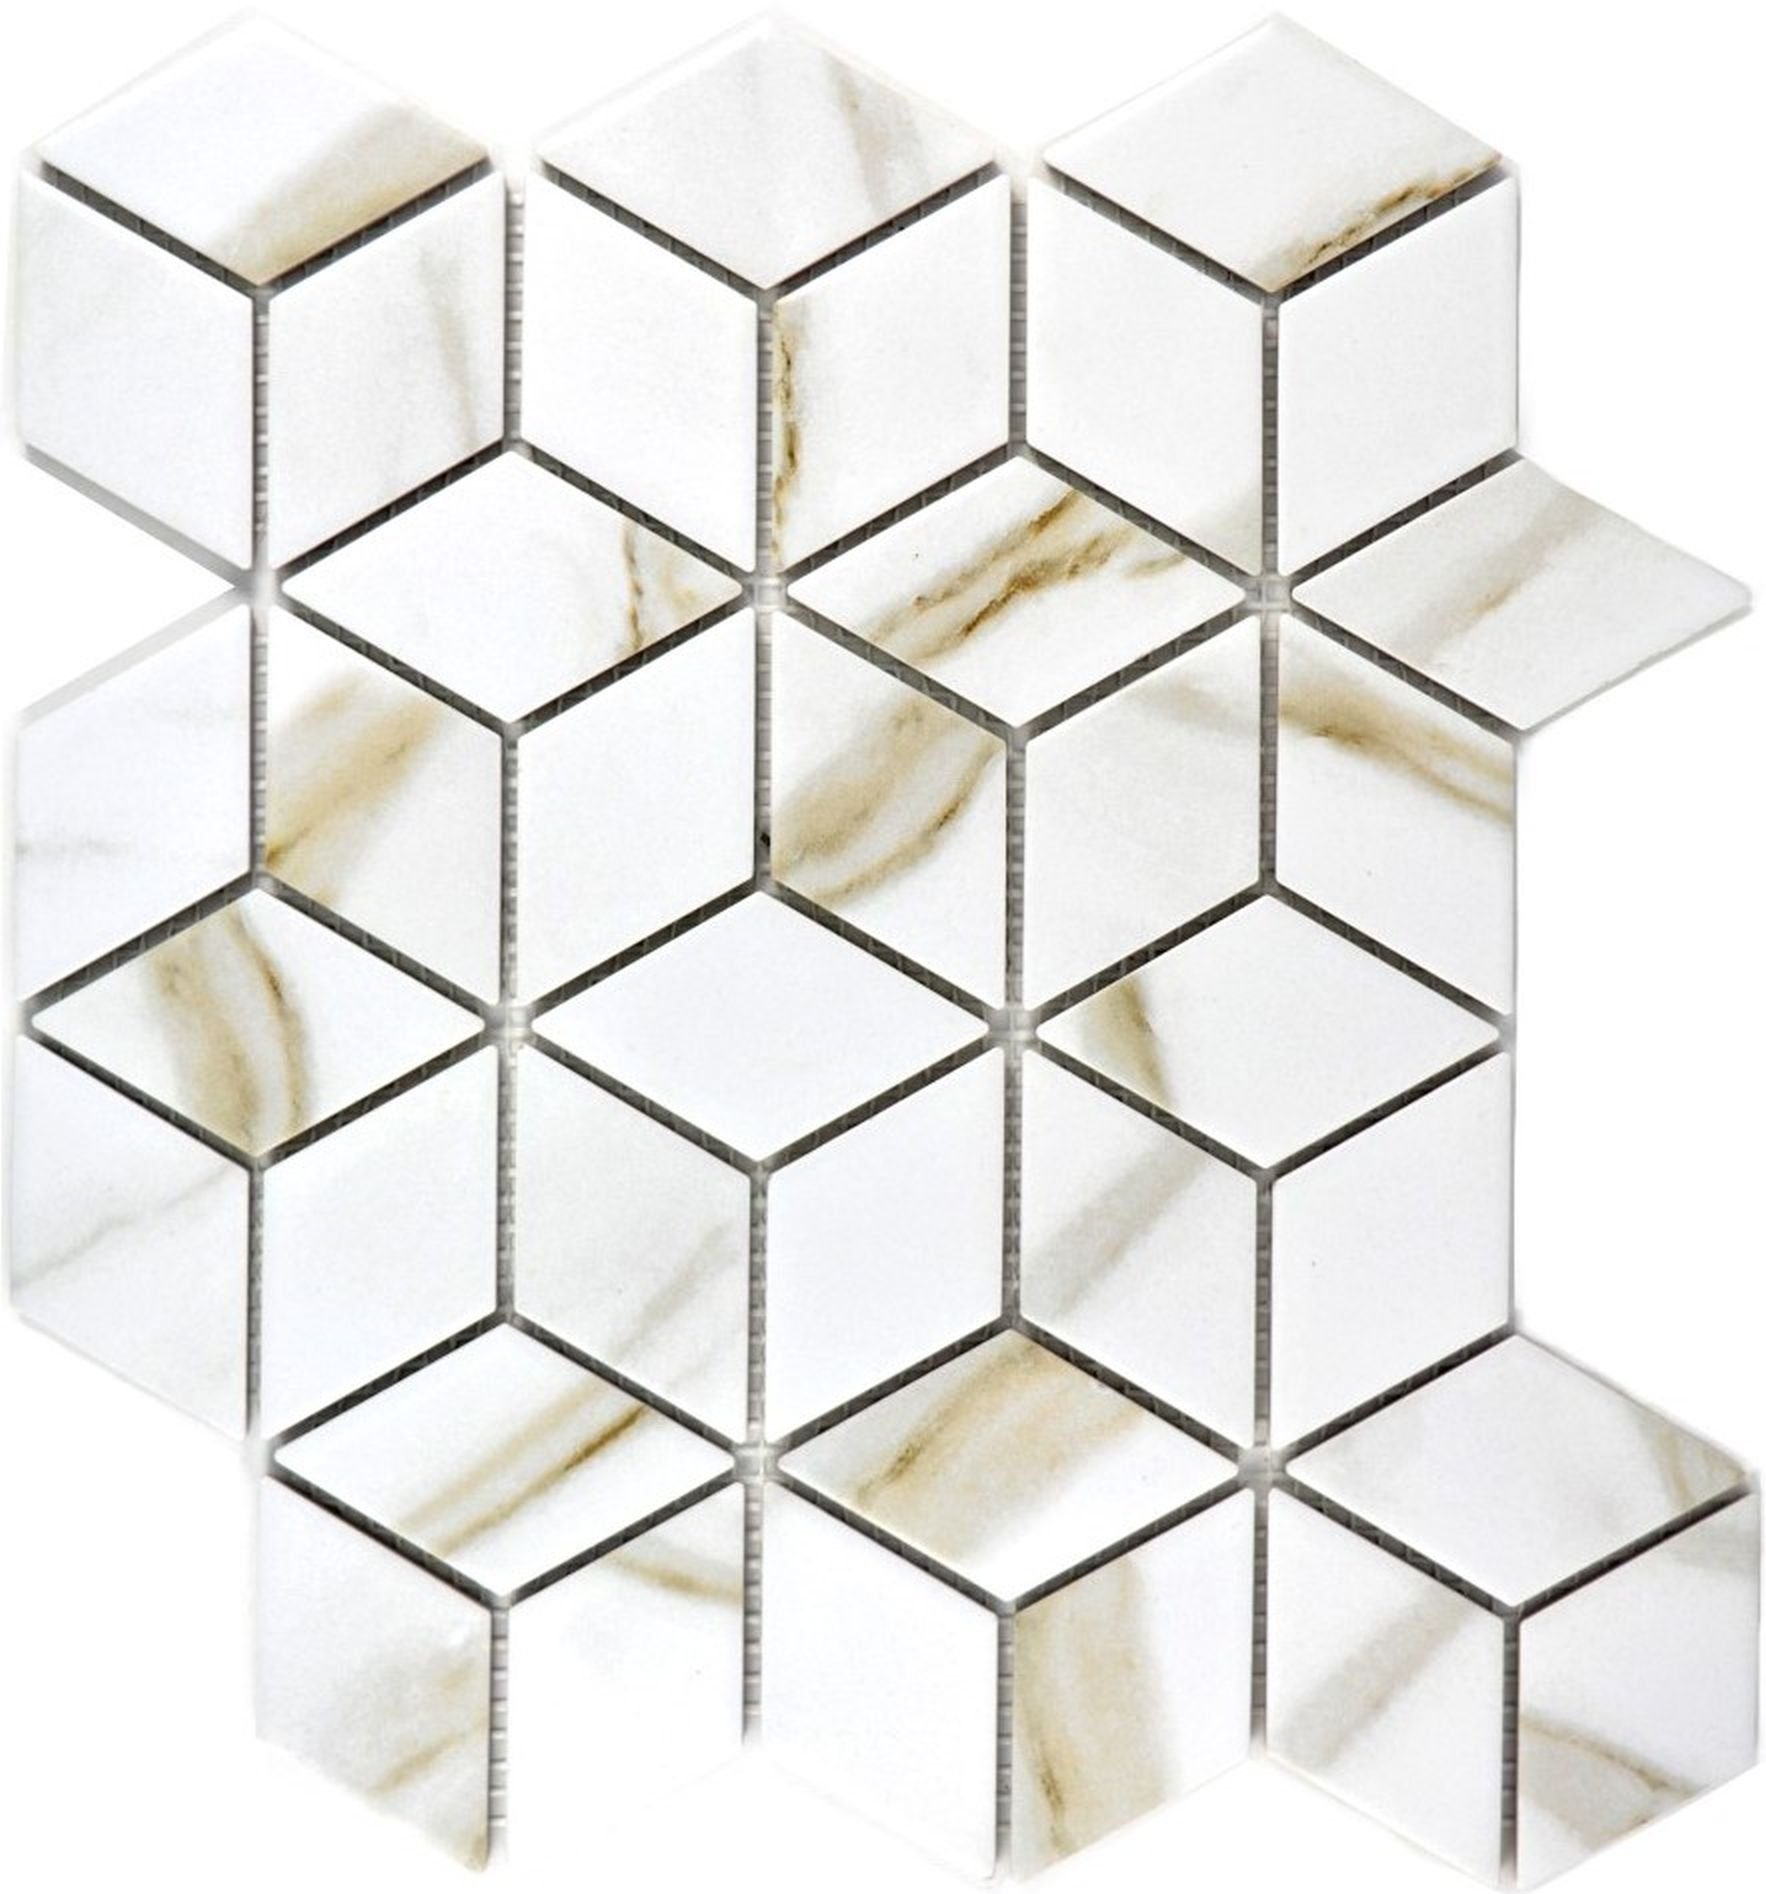 Mosani Mosaikfliesen Diamant Keramikmosaik Mosaikfliesen weiß matt / 10 Matten